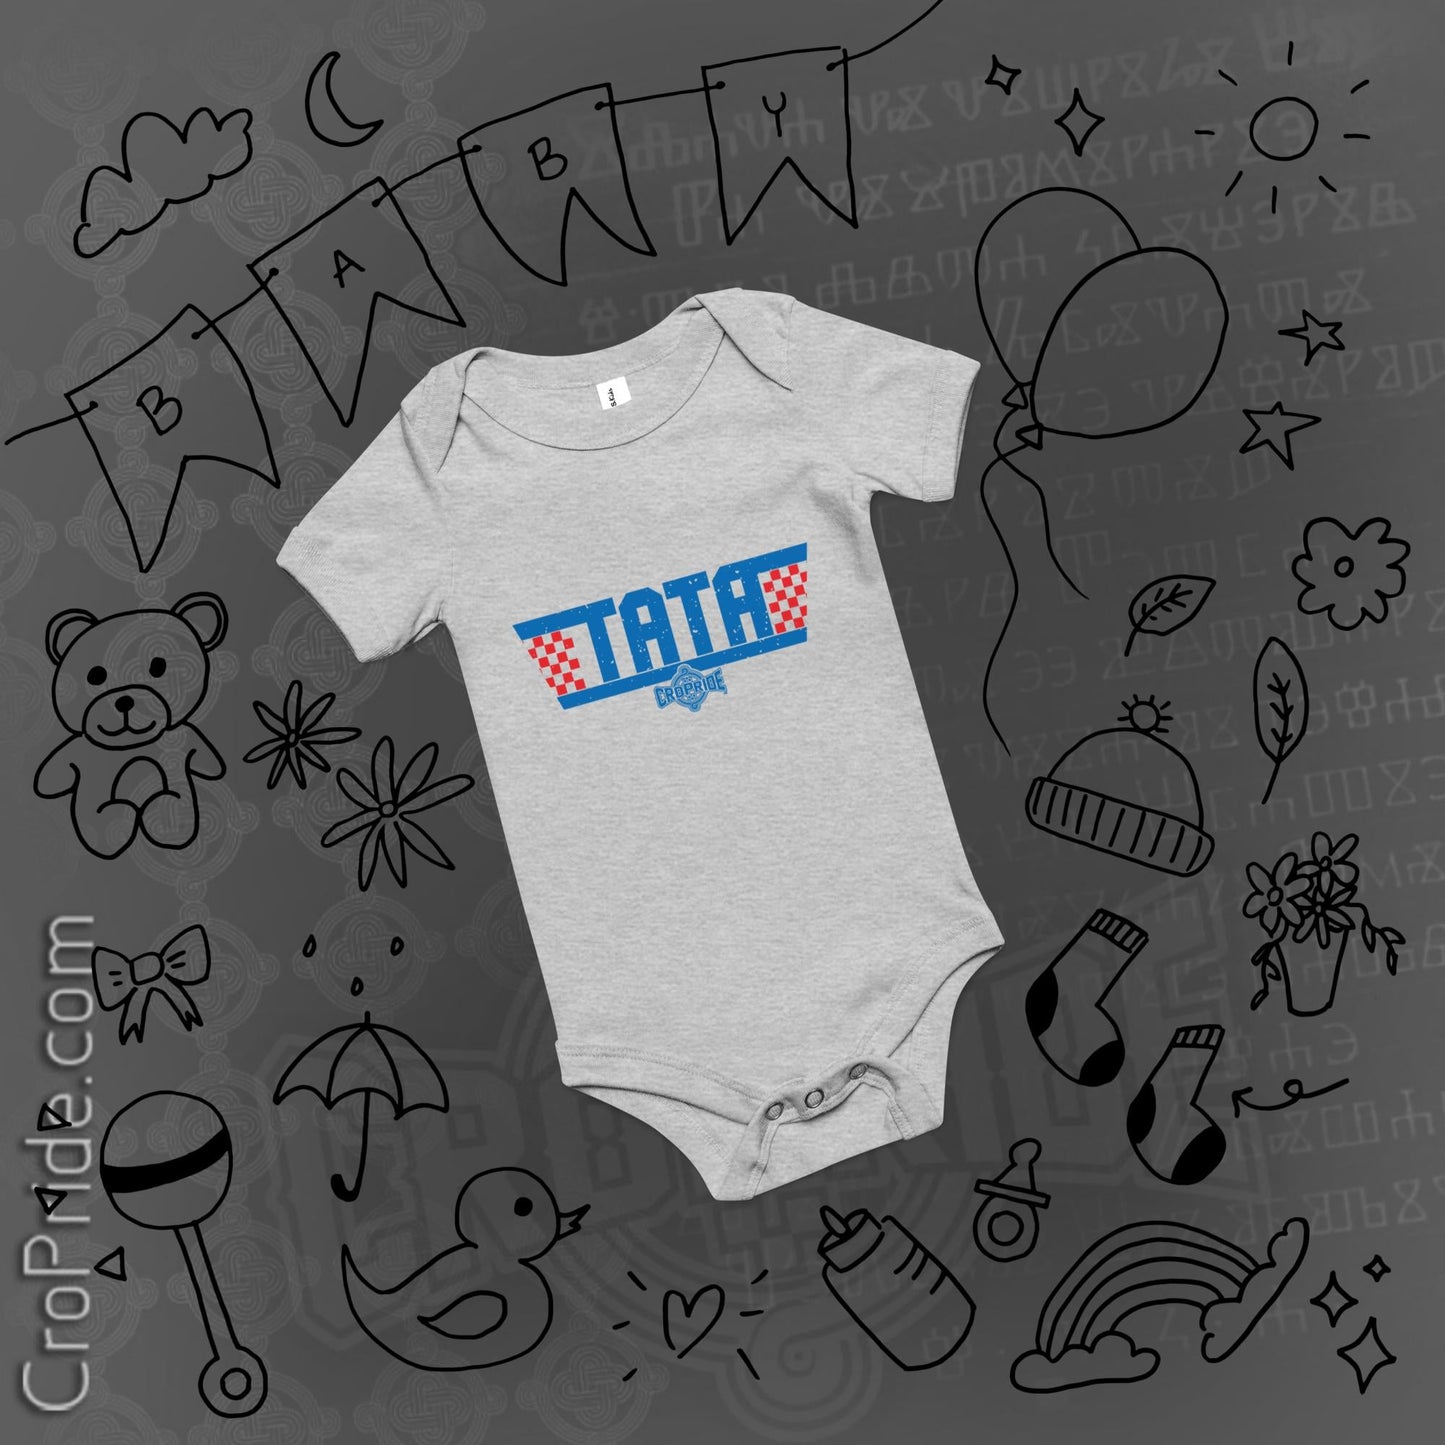 Croatian Baby Onesie - "Tata" - Declare Your Favorite